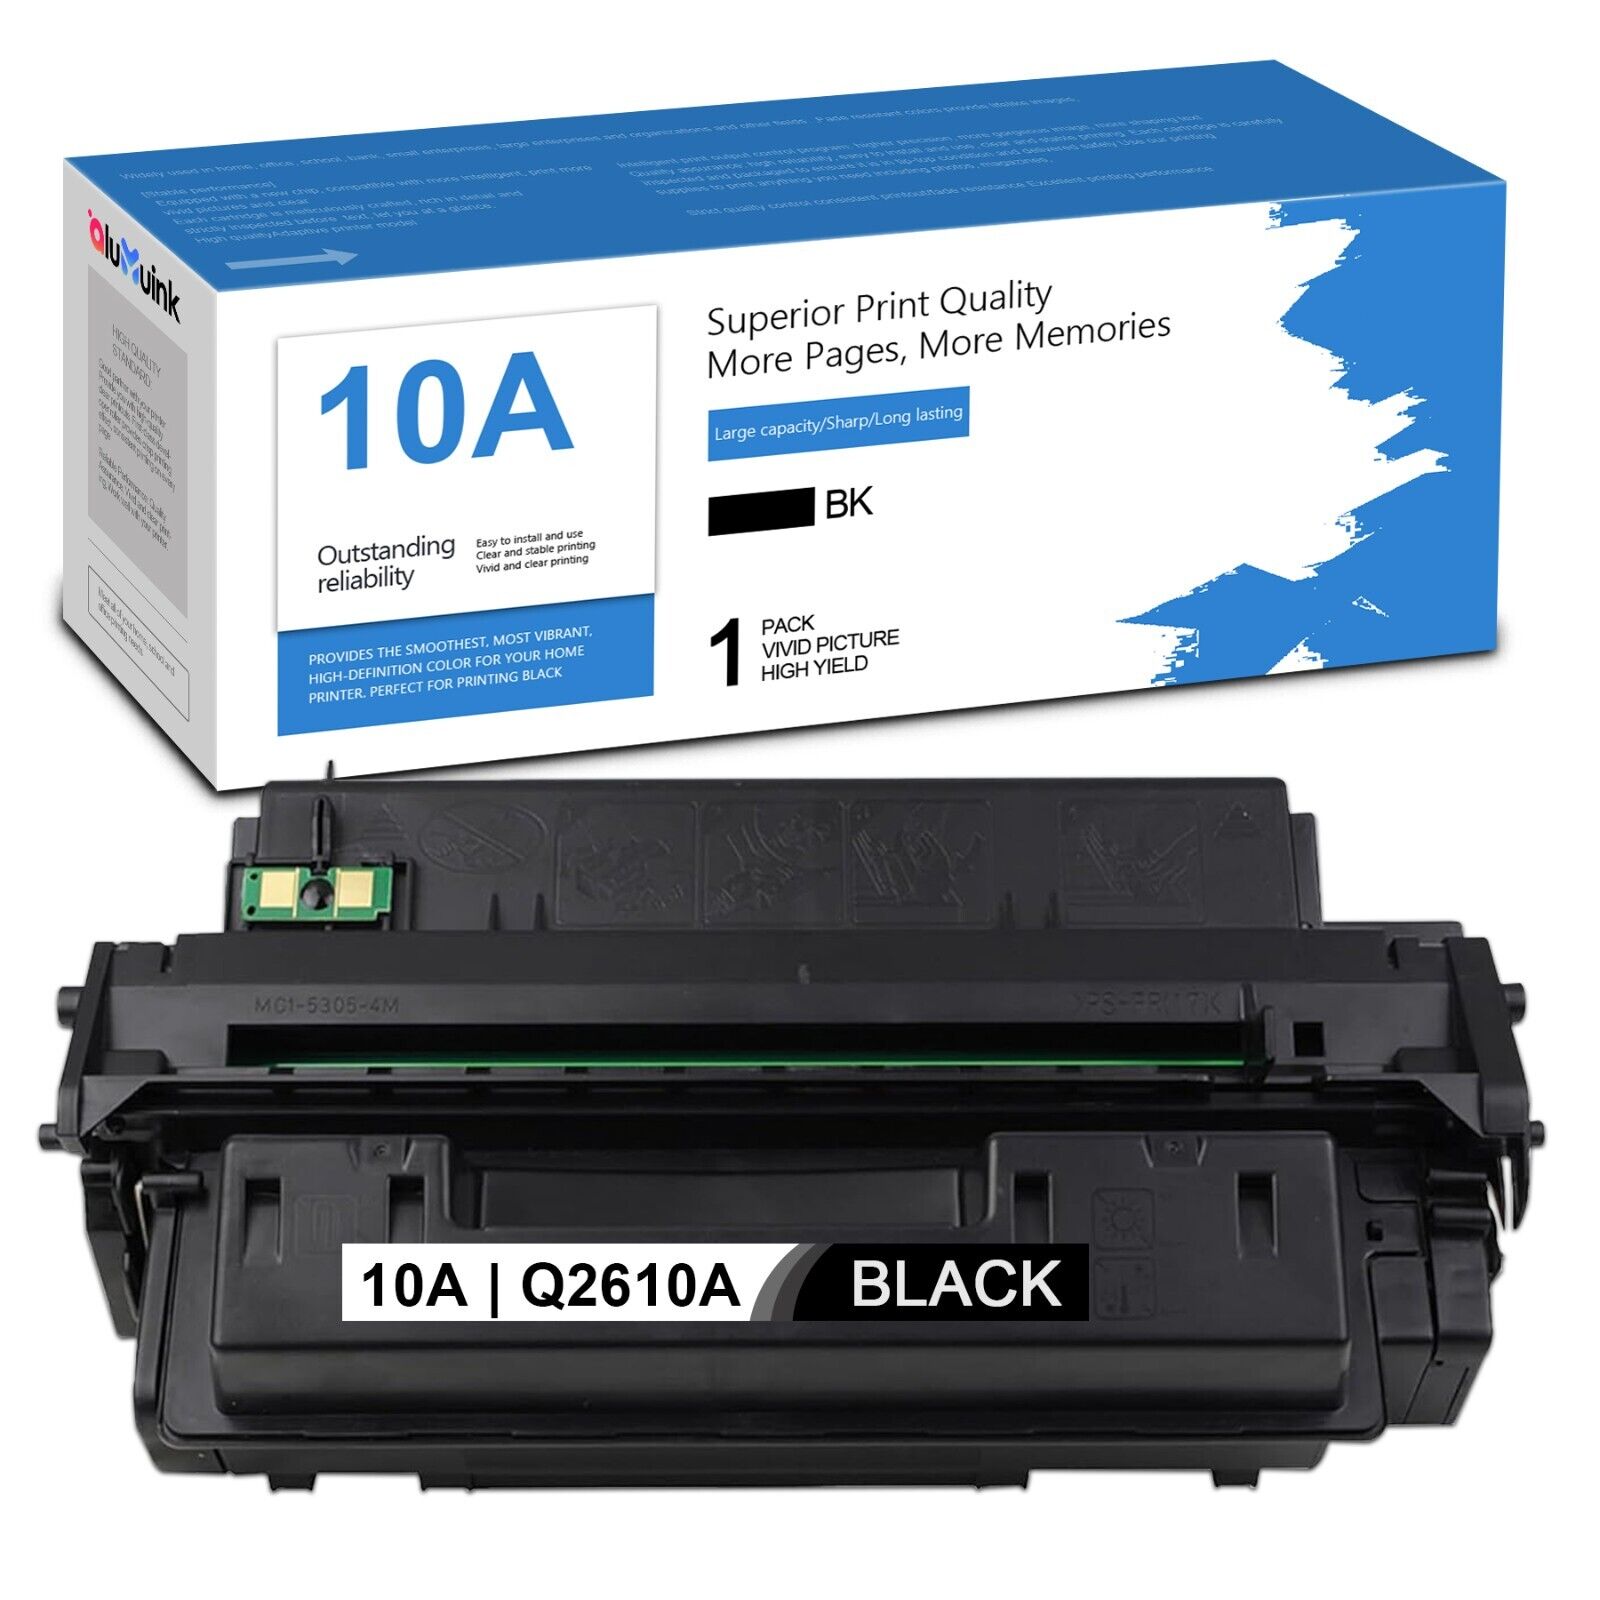 10A | Q2610A Black Toner Cartridge Replacement for HP 10A 2300 2300L 2300d